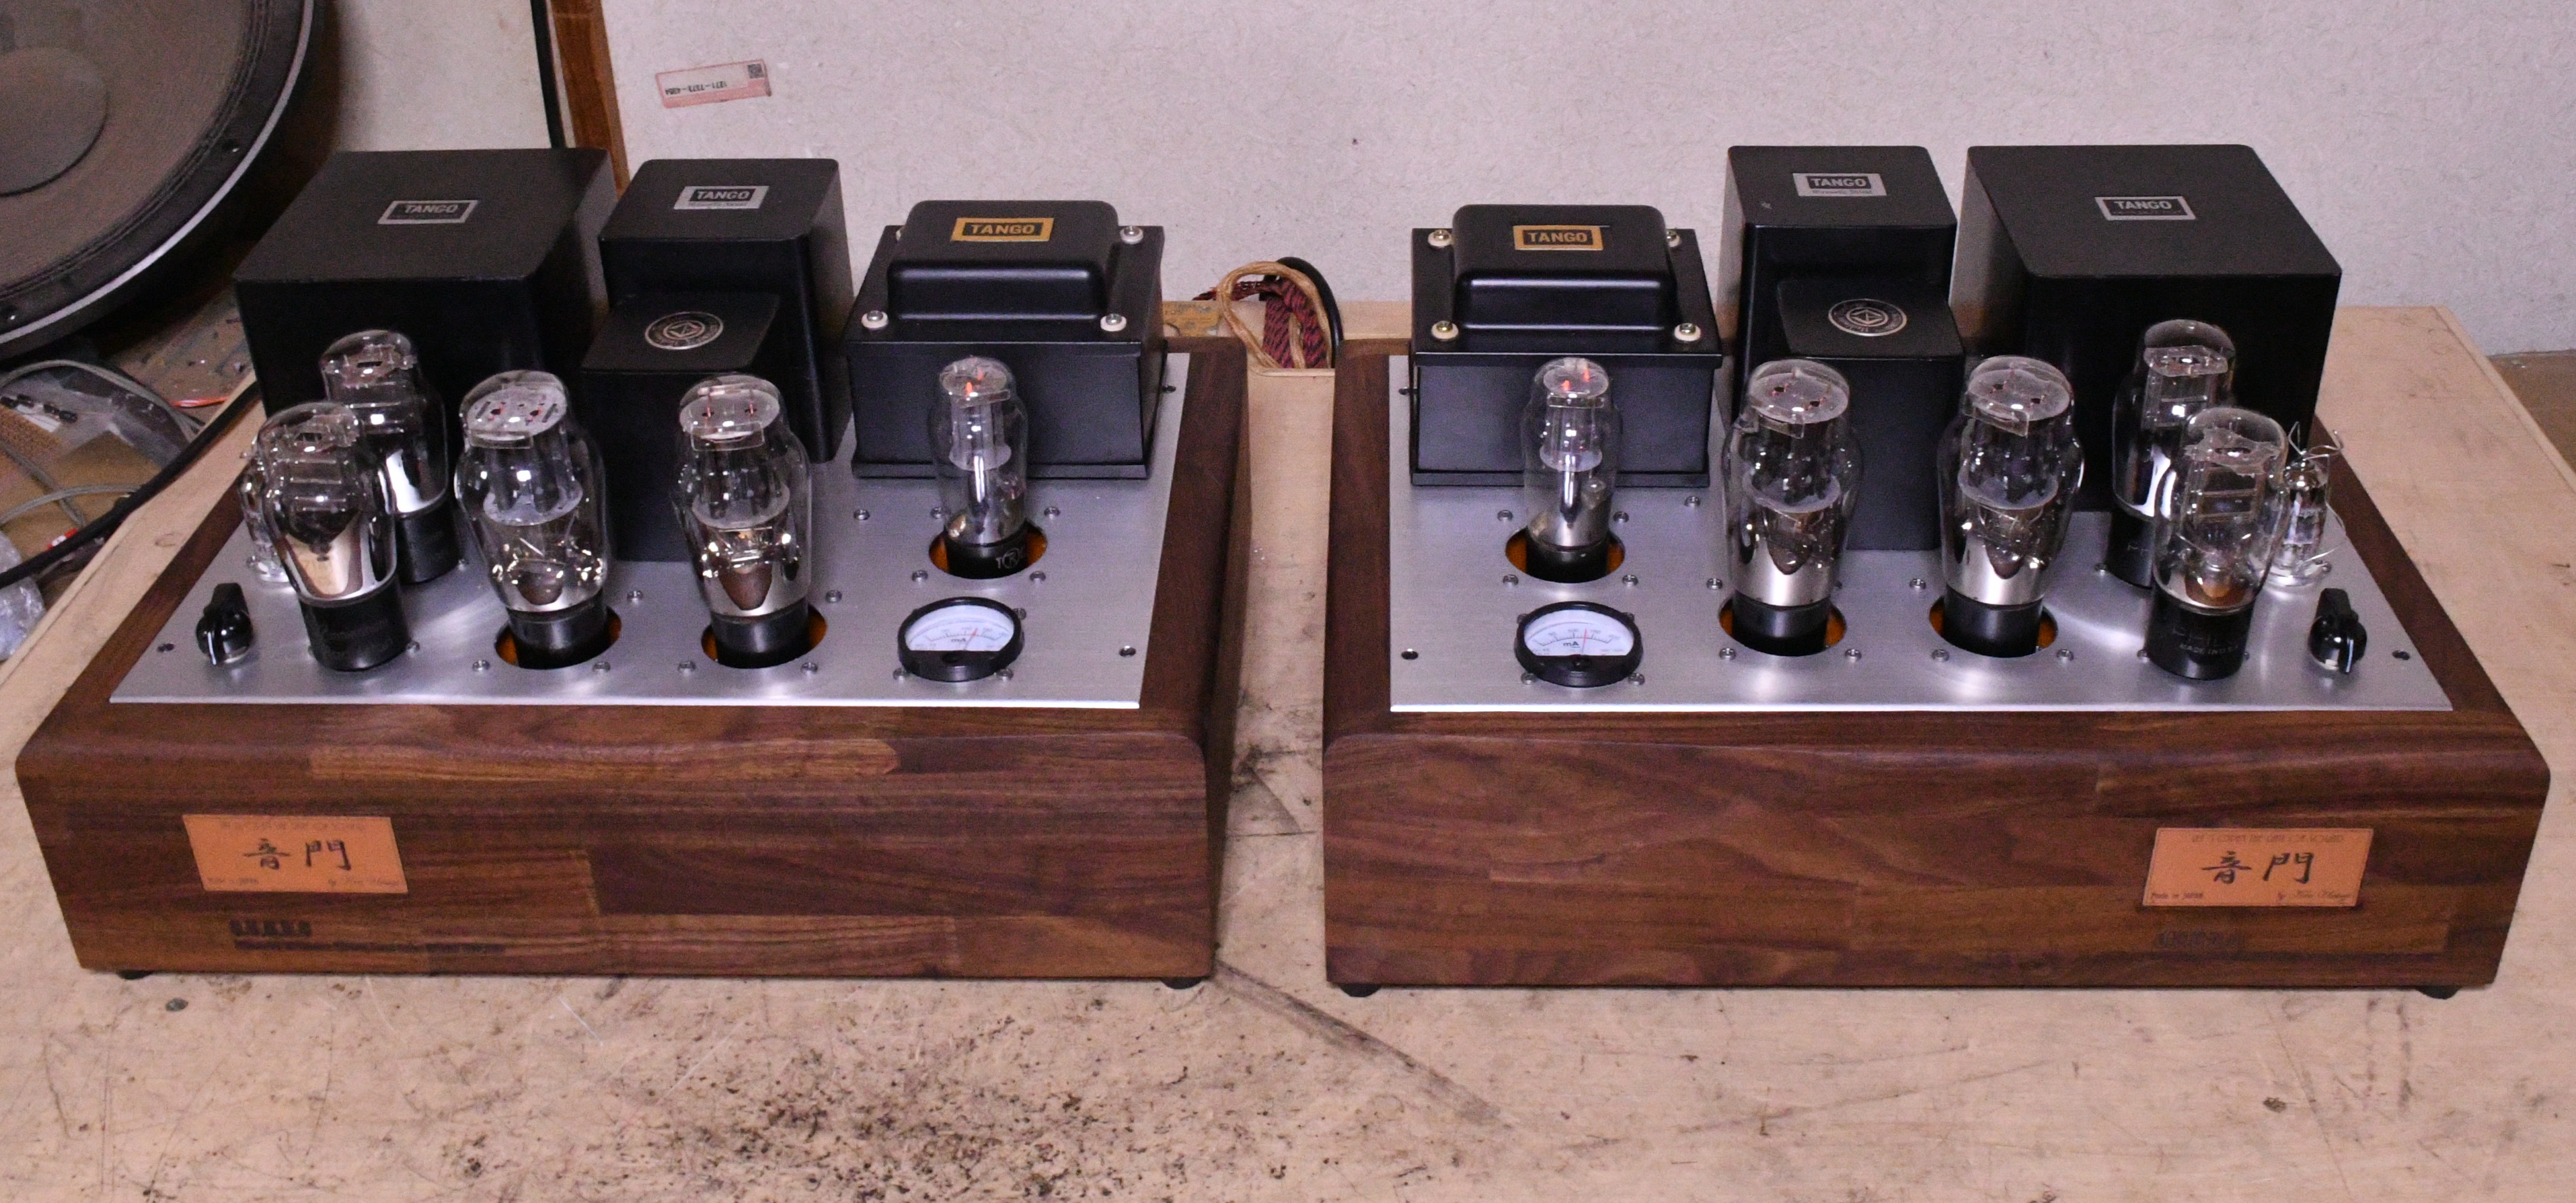 [Prototype] OTOMON LAB 71A drive 45/2A3 PP tube amplifier 20W power monoblockx2 Zero NFB (O.U.D.D.C)